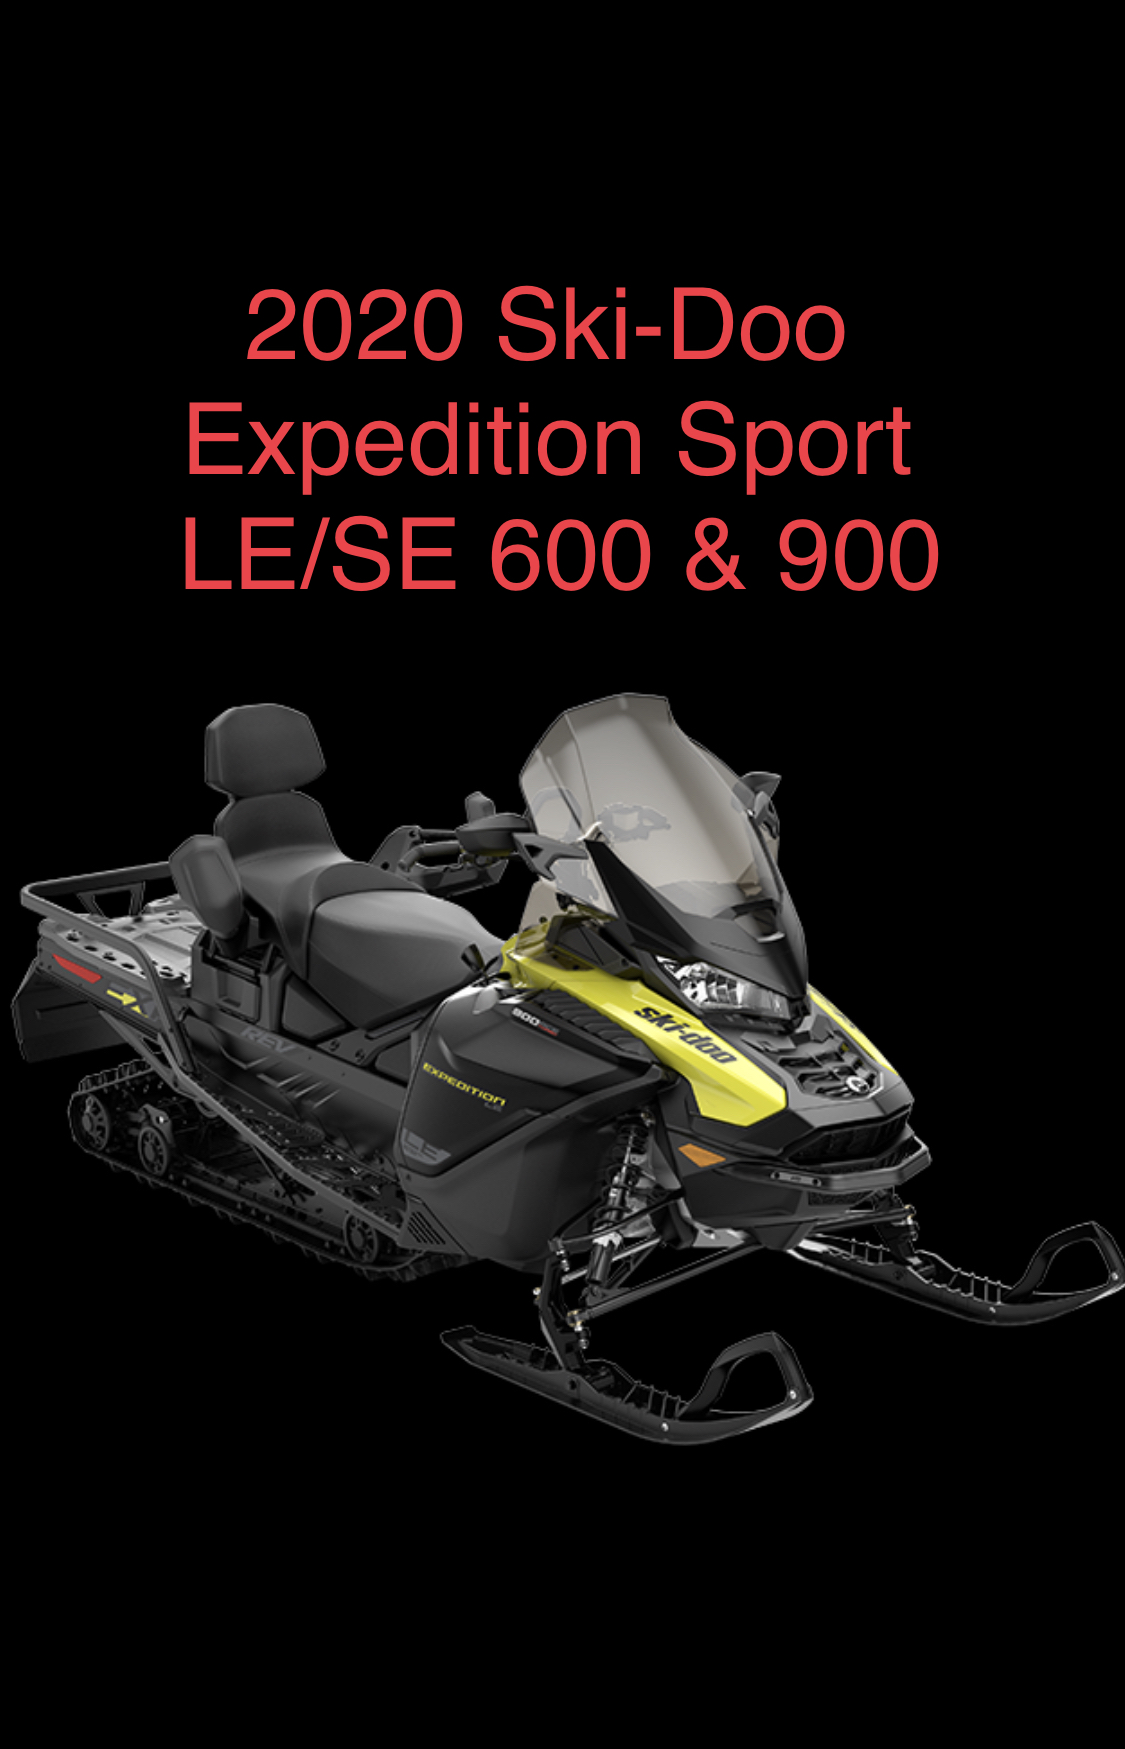 2020 Ski-Doo Expedition Sport / LE/ SE 600/900维修保养手册大师合集（庞巴迪雪地.远征）